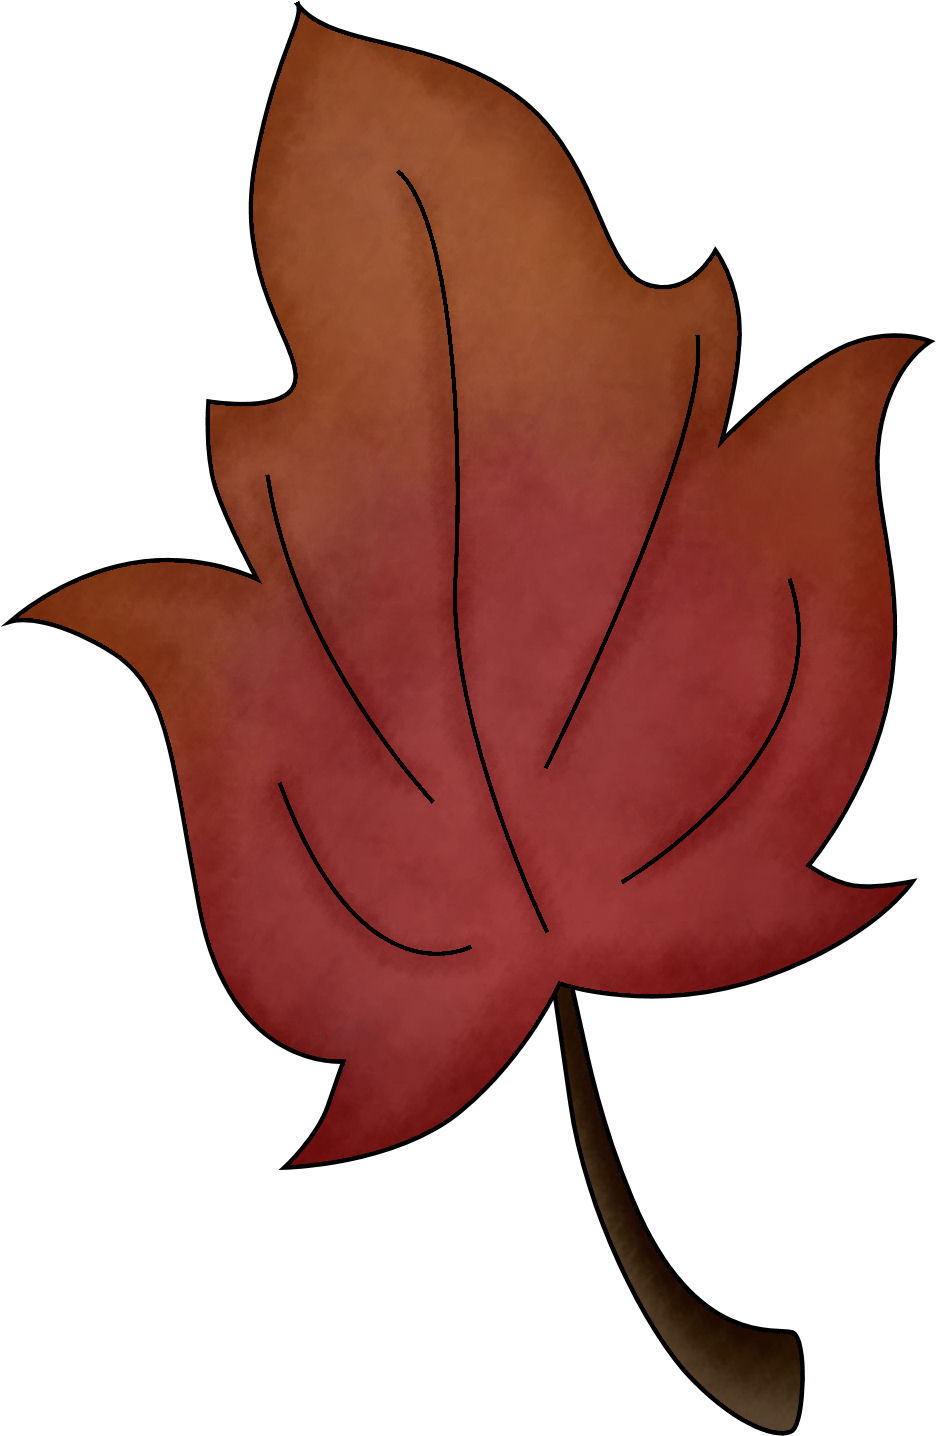 Pumpkin Leaf Clip Art   Clipart Panda   Free Clipart Images